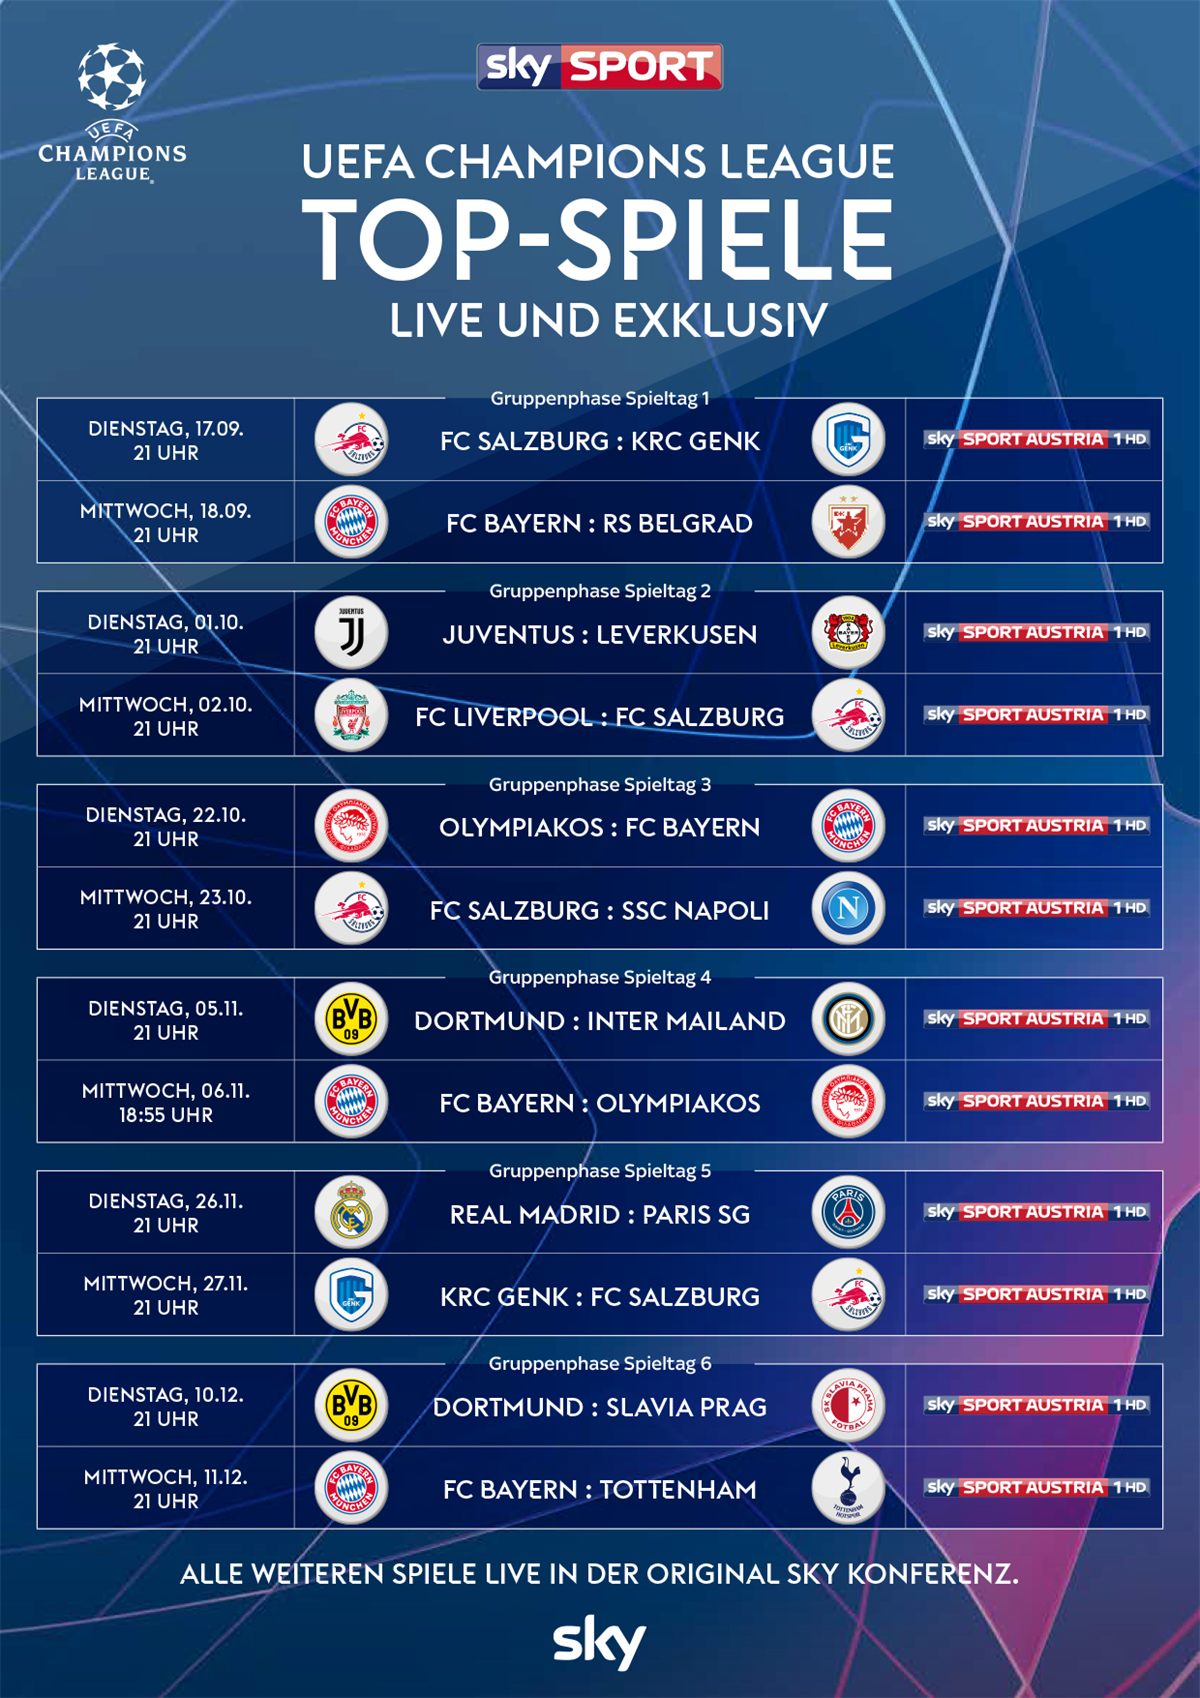 Sky UEFA Champions League Top-Spiele